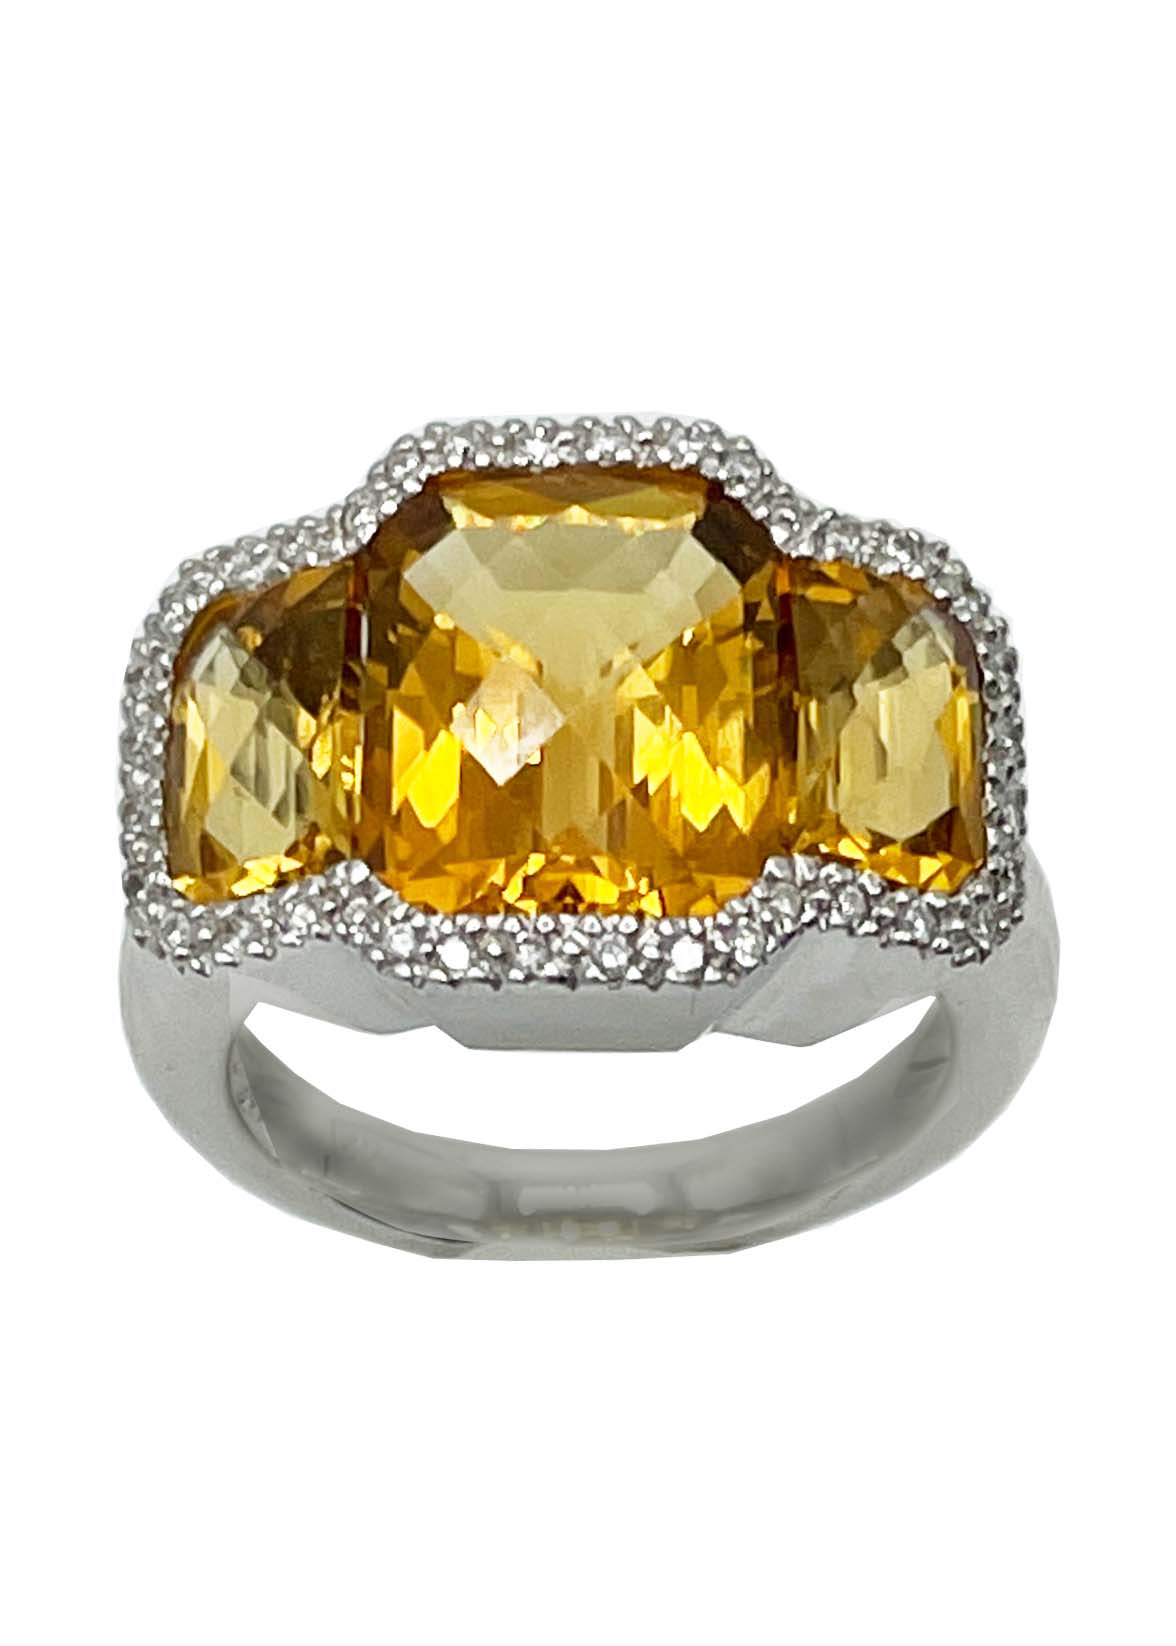 18k White Gold Topaz and Diamond Ring Image